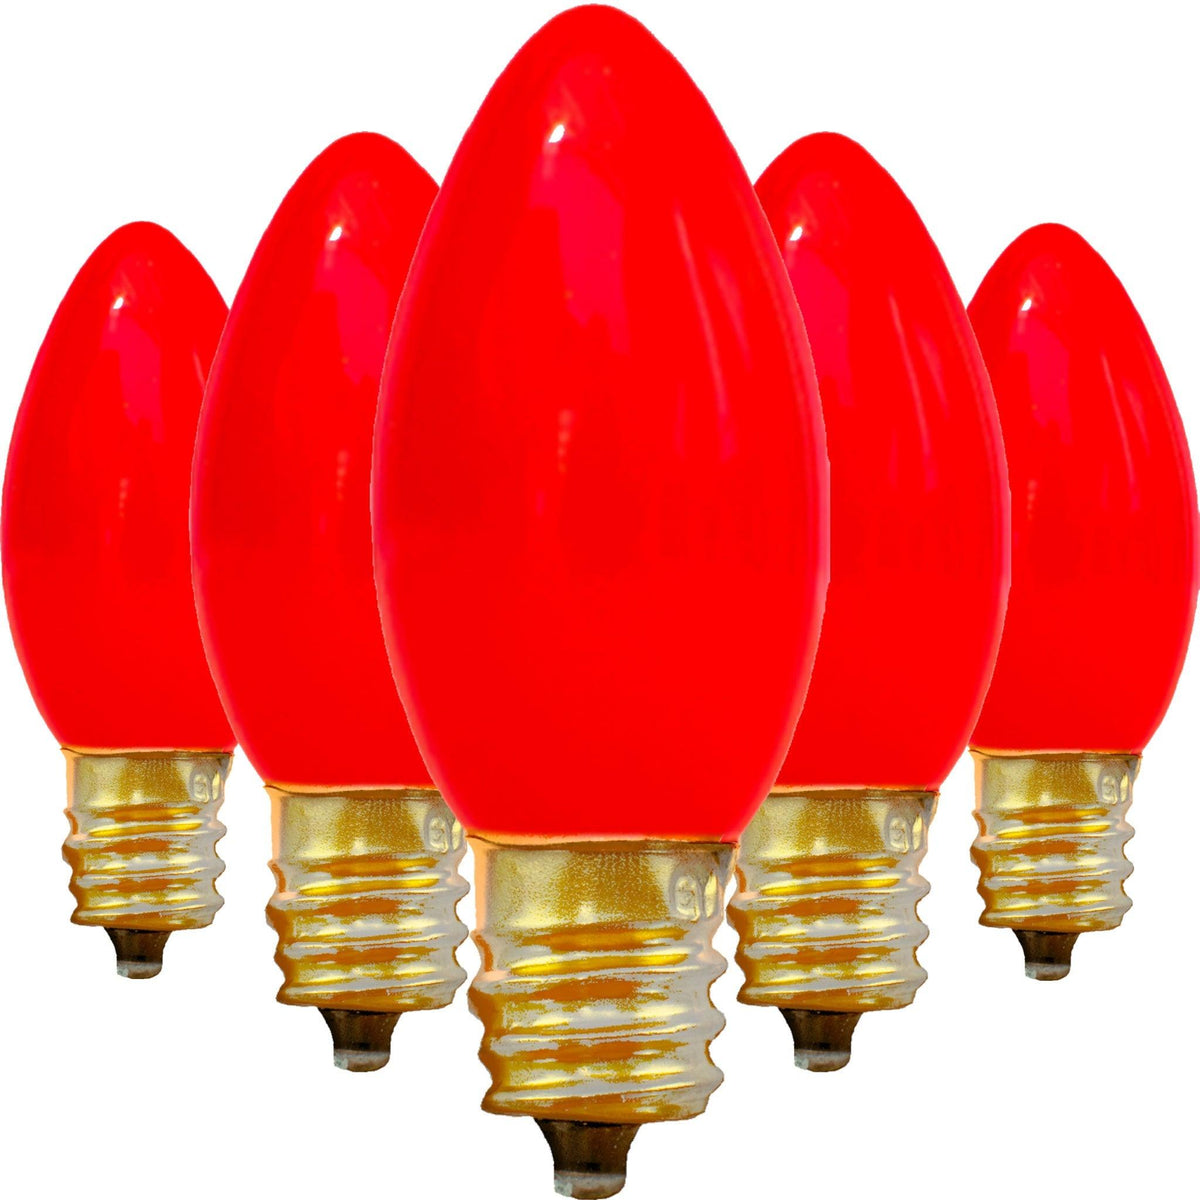 Lee Display's Classic C7/C9 Candelabra Style Solid Ceramic Red Christmas Light Bulbs on sale at leedisplay.com